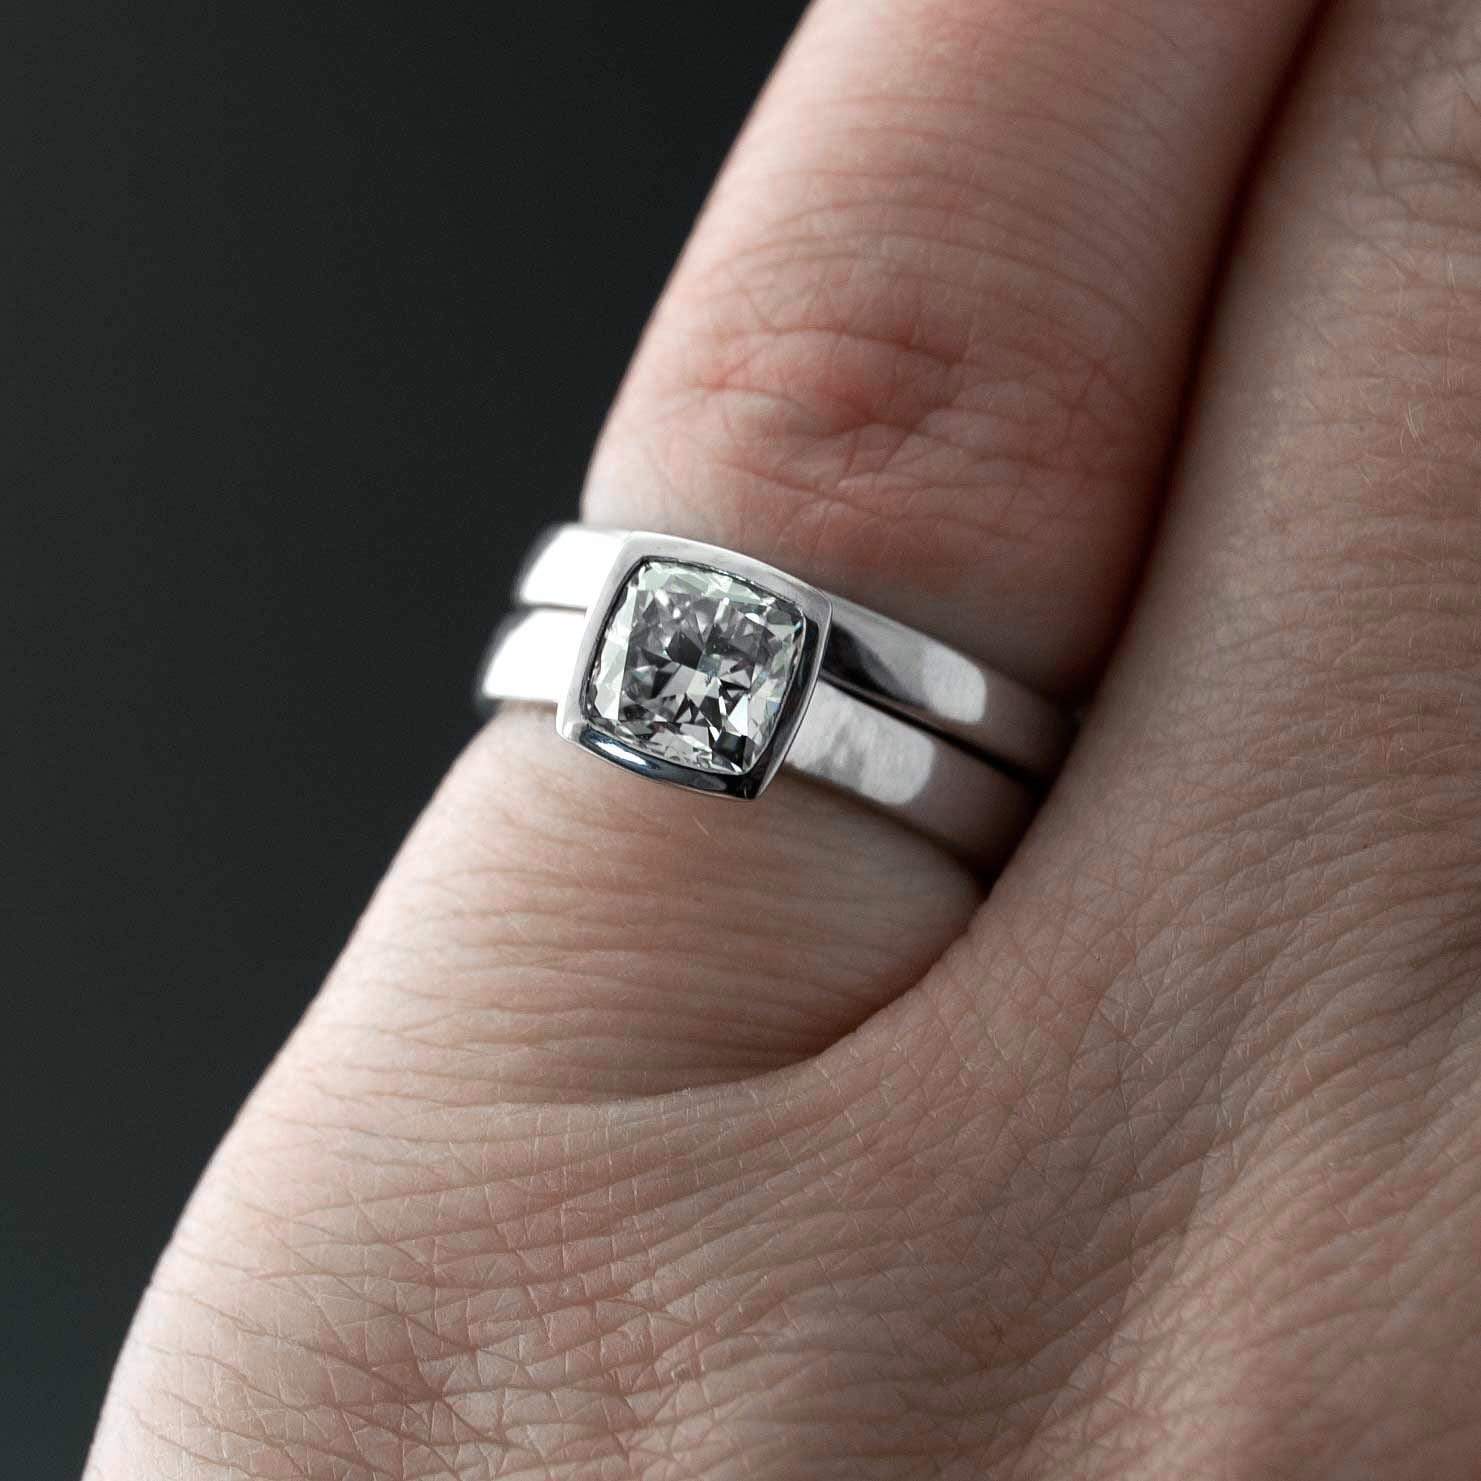 Why choose a 1 carat engagement ring? BAUNAT has the answer - BAUNAT